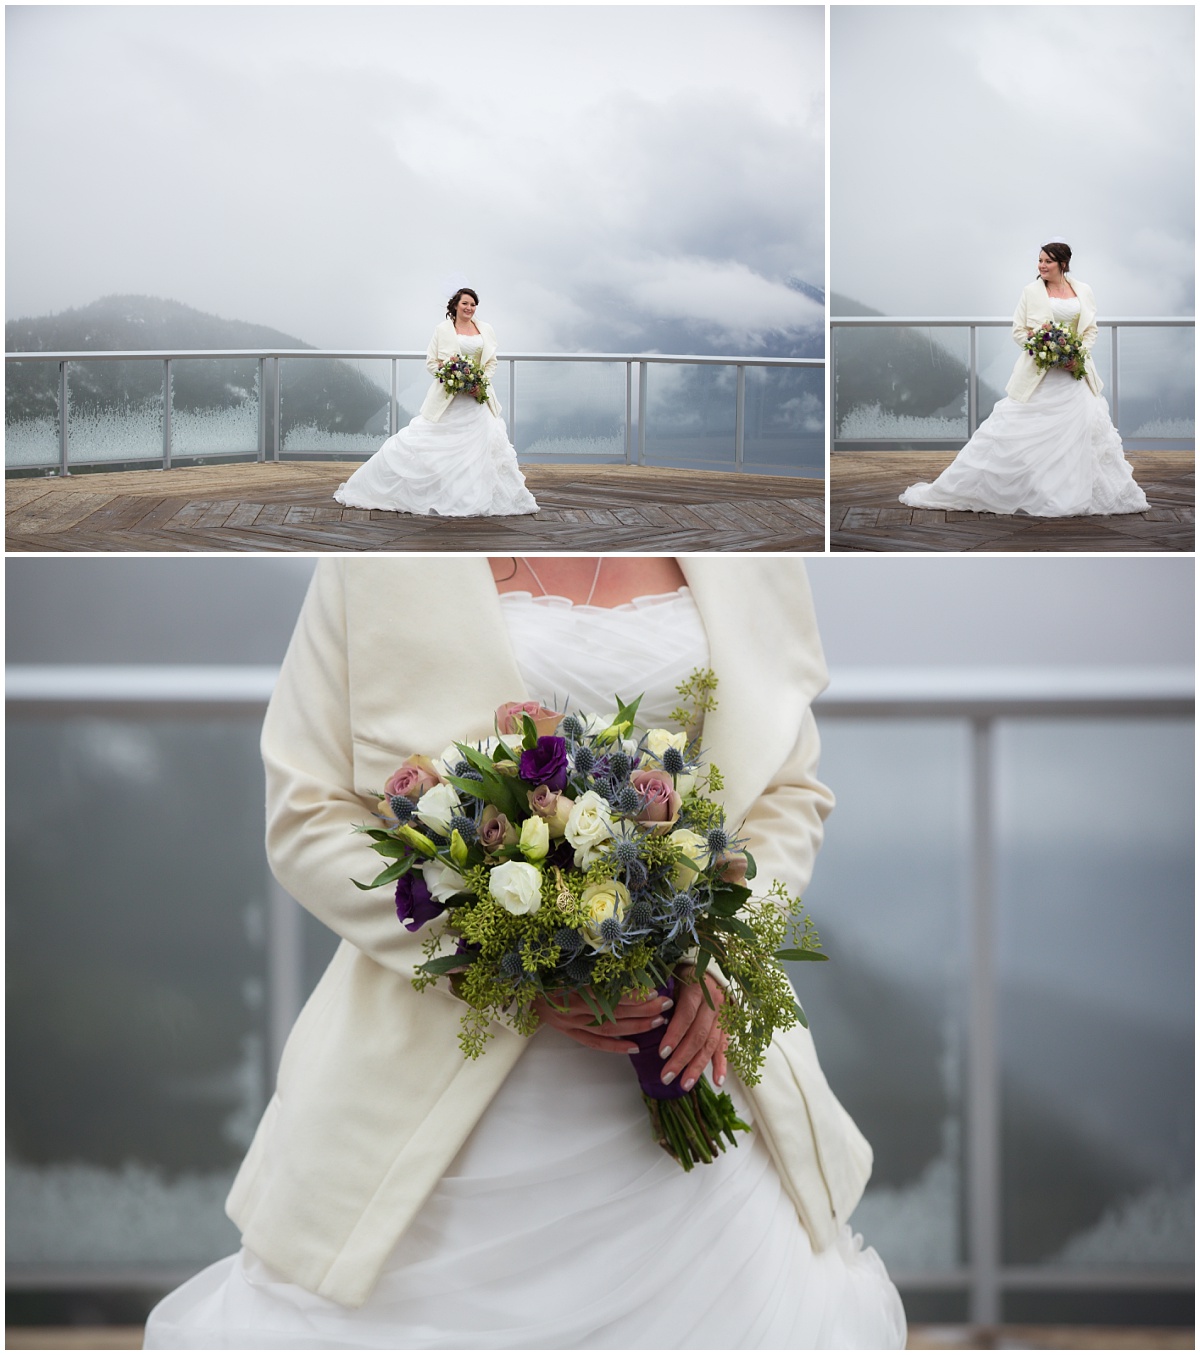 Amazing Day Photography - Squamish Wedding - Howe Sound Inn Wedding - Sea to Sky Gondola Wedding - Squamish Wedding Photographer - Winter Wedding - Snowy Wedding (19).jpg